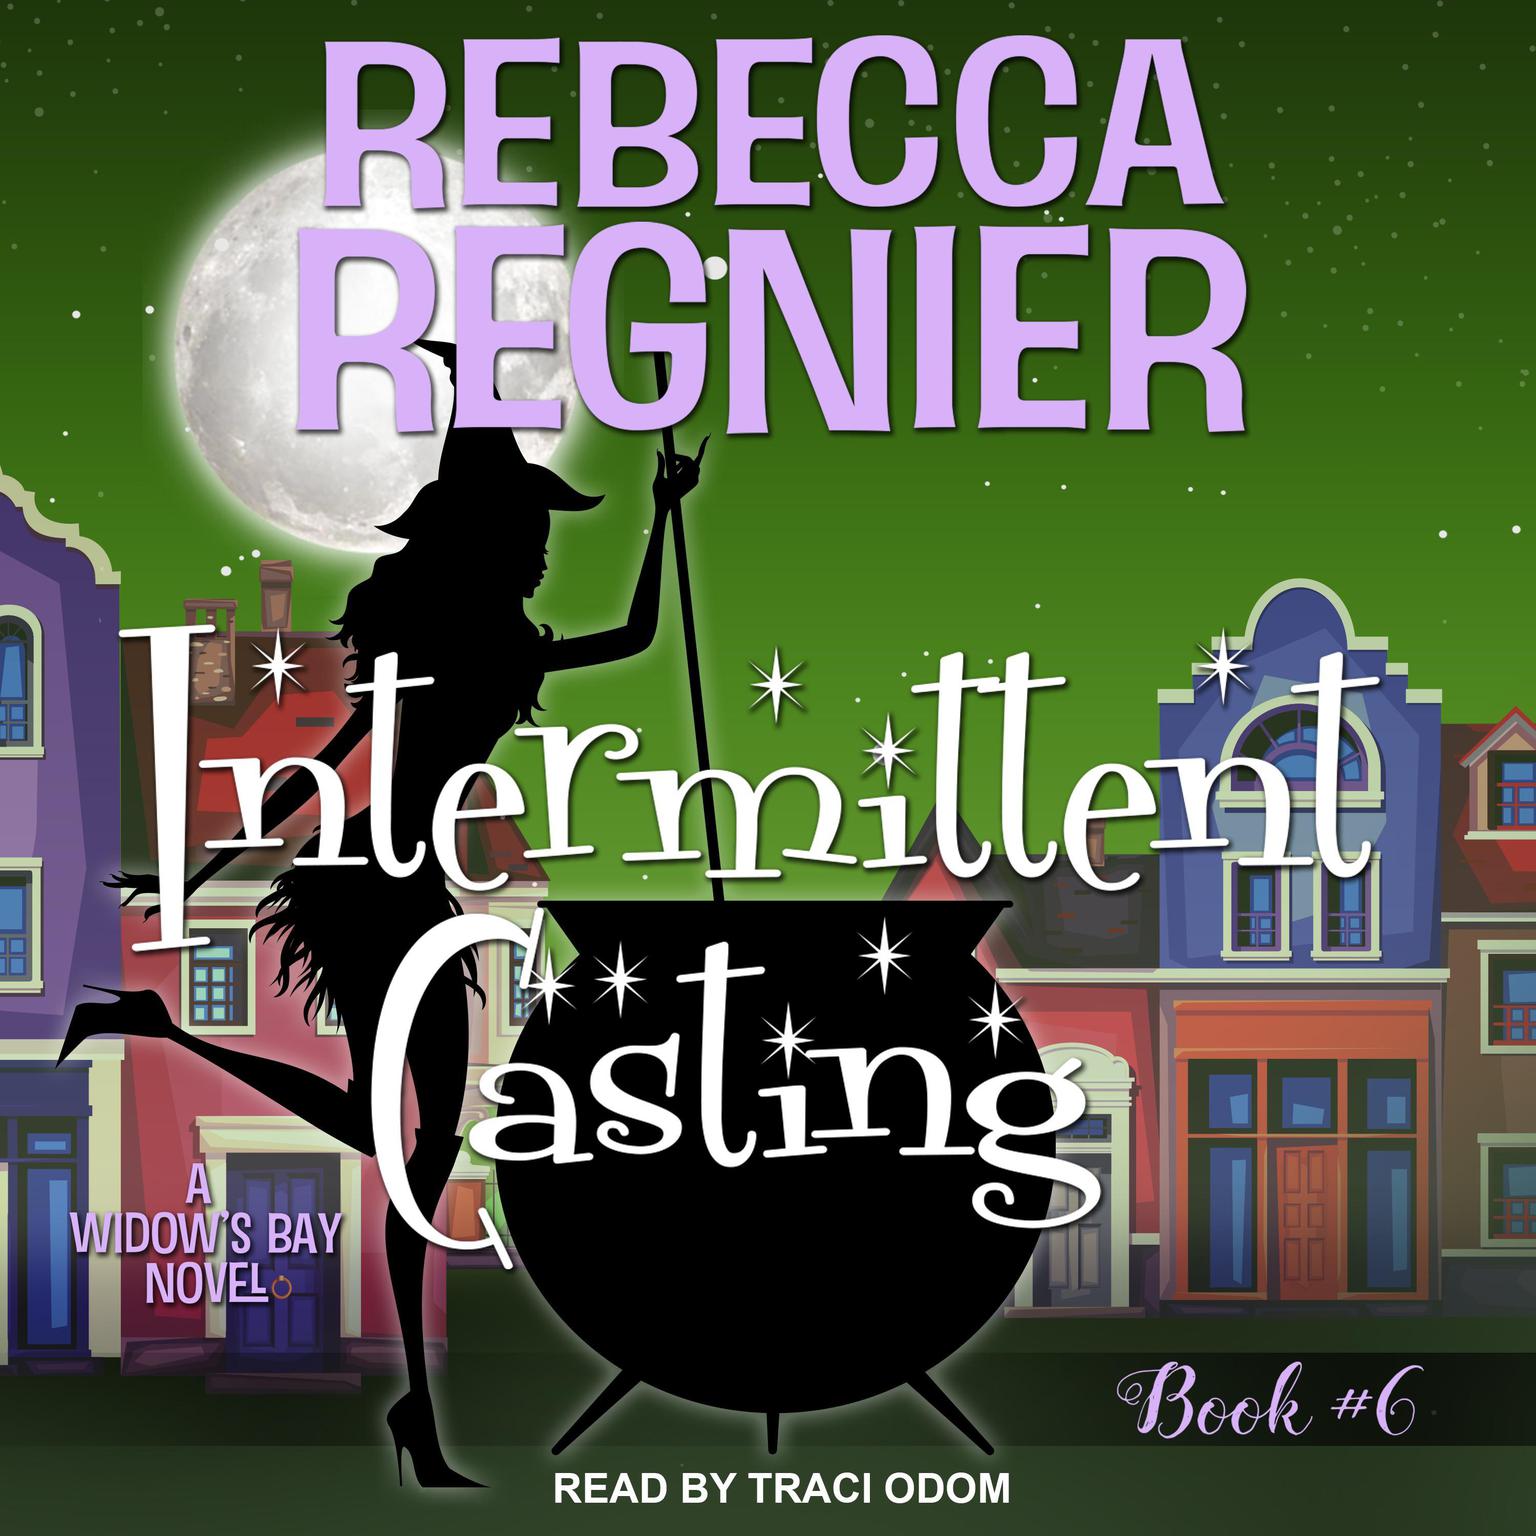 Intermittent Casting: A Widows Bay Novel Audiobook, by Rebecca Regnier